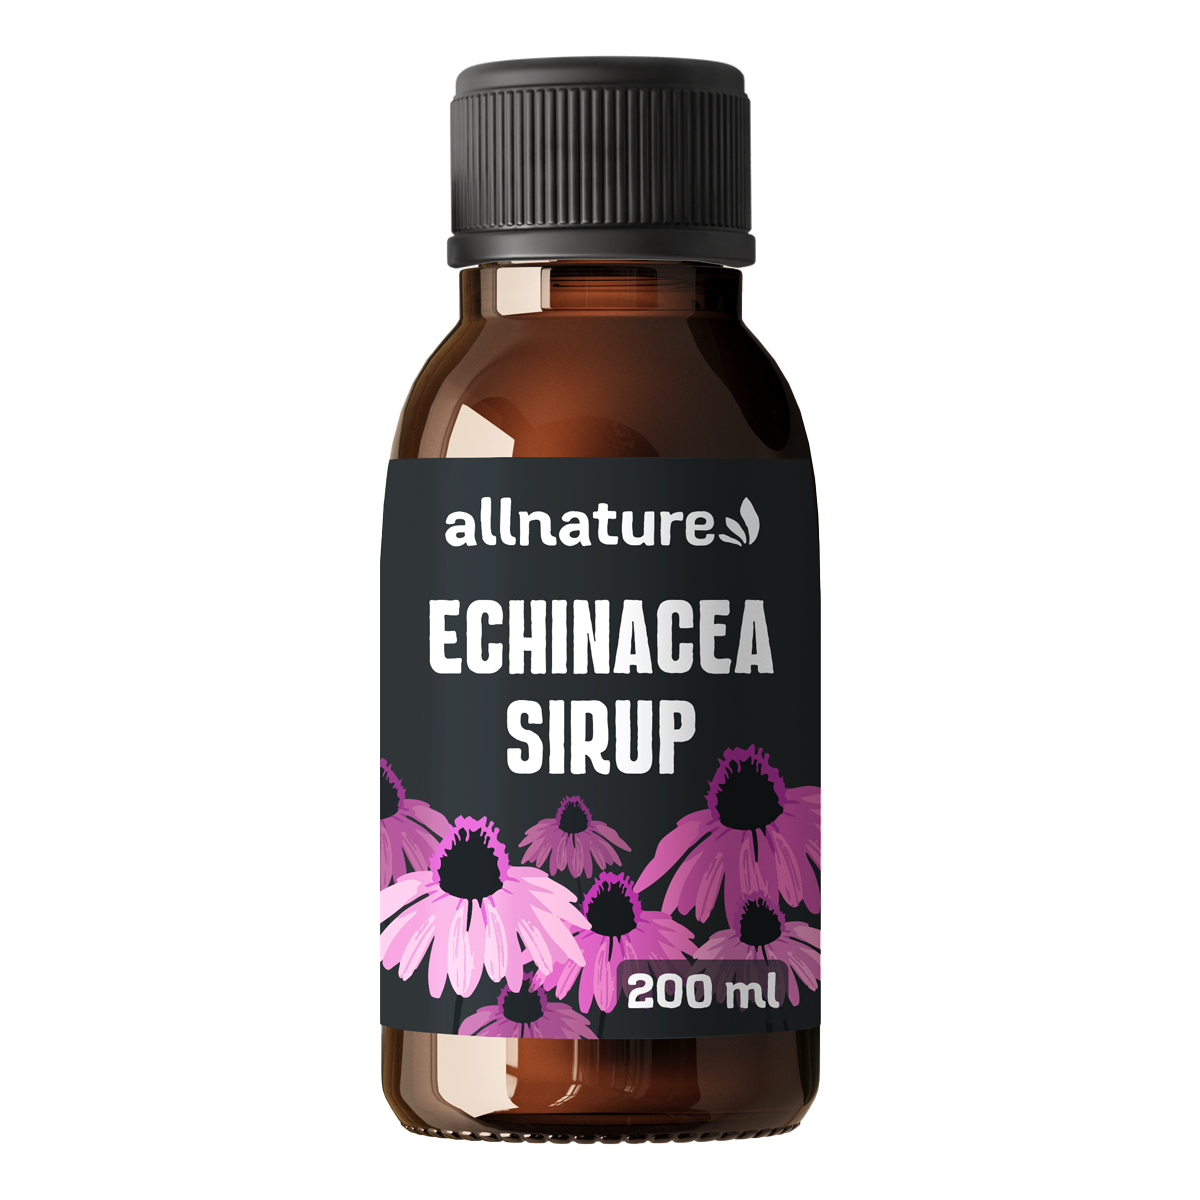 Allnature Echinacea sirup 200 ml Allnature